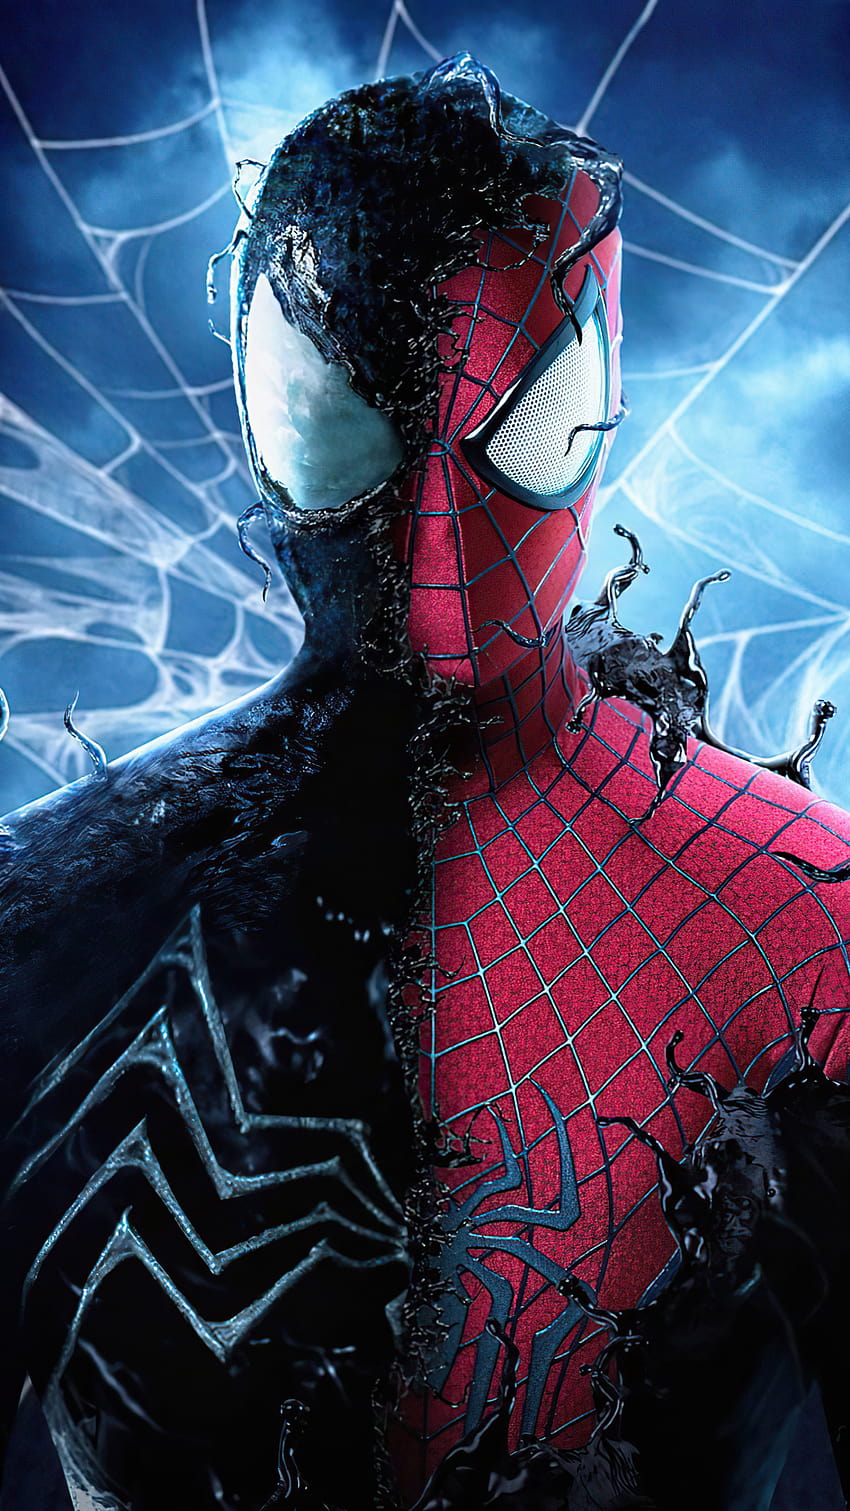 1080x1920 Spider Man Dengan Symbiote Iphone 7,6s,6 Plus, Pixel xl ,One Plus 3,3t,5 , Latar belakang, dan, setelan spider man symbiote wallpaper ponsel HD